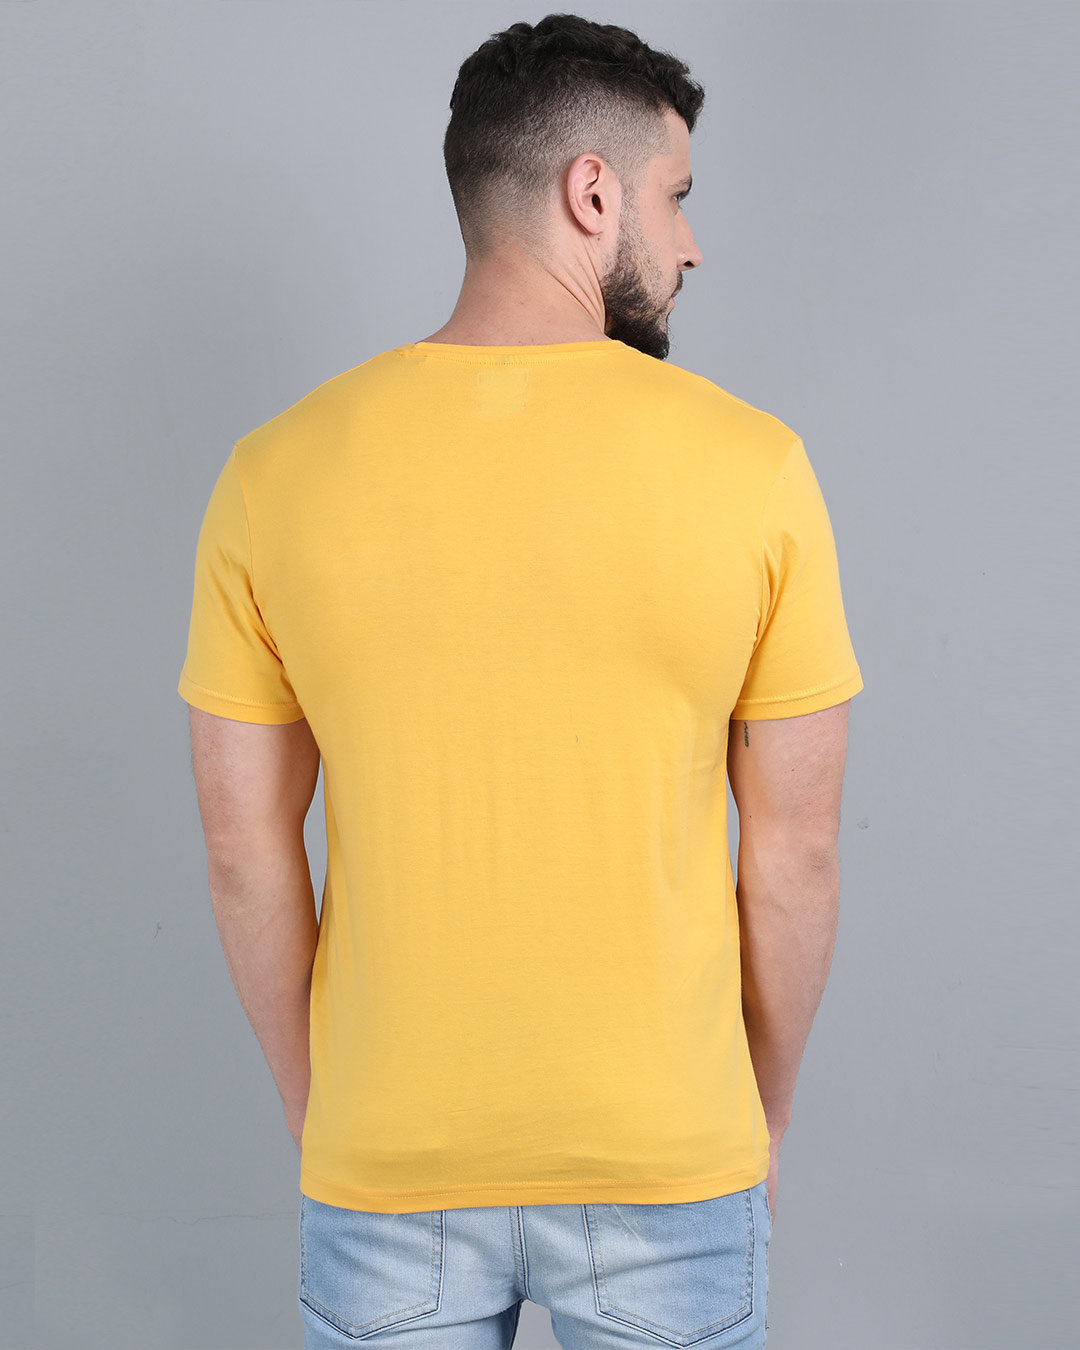 Shop Pocket Design T-Shirt Yellow-Back